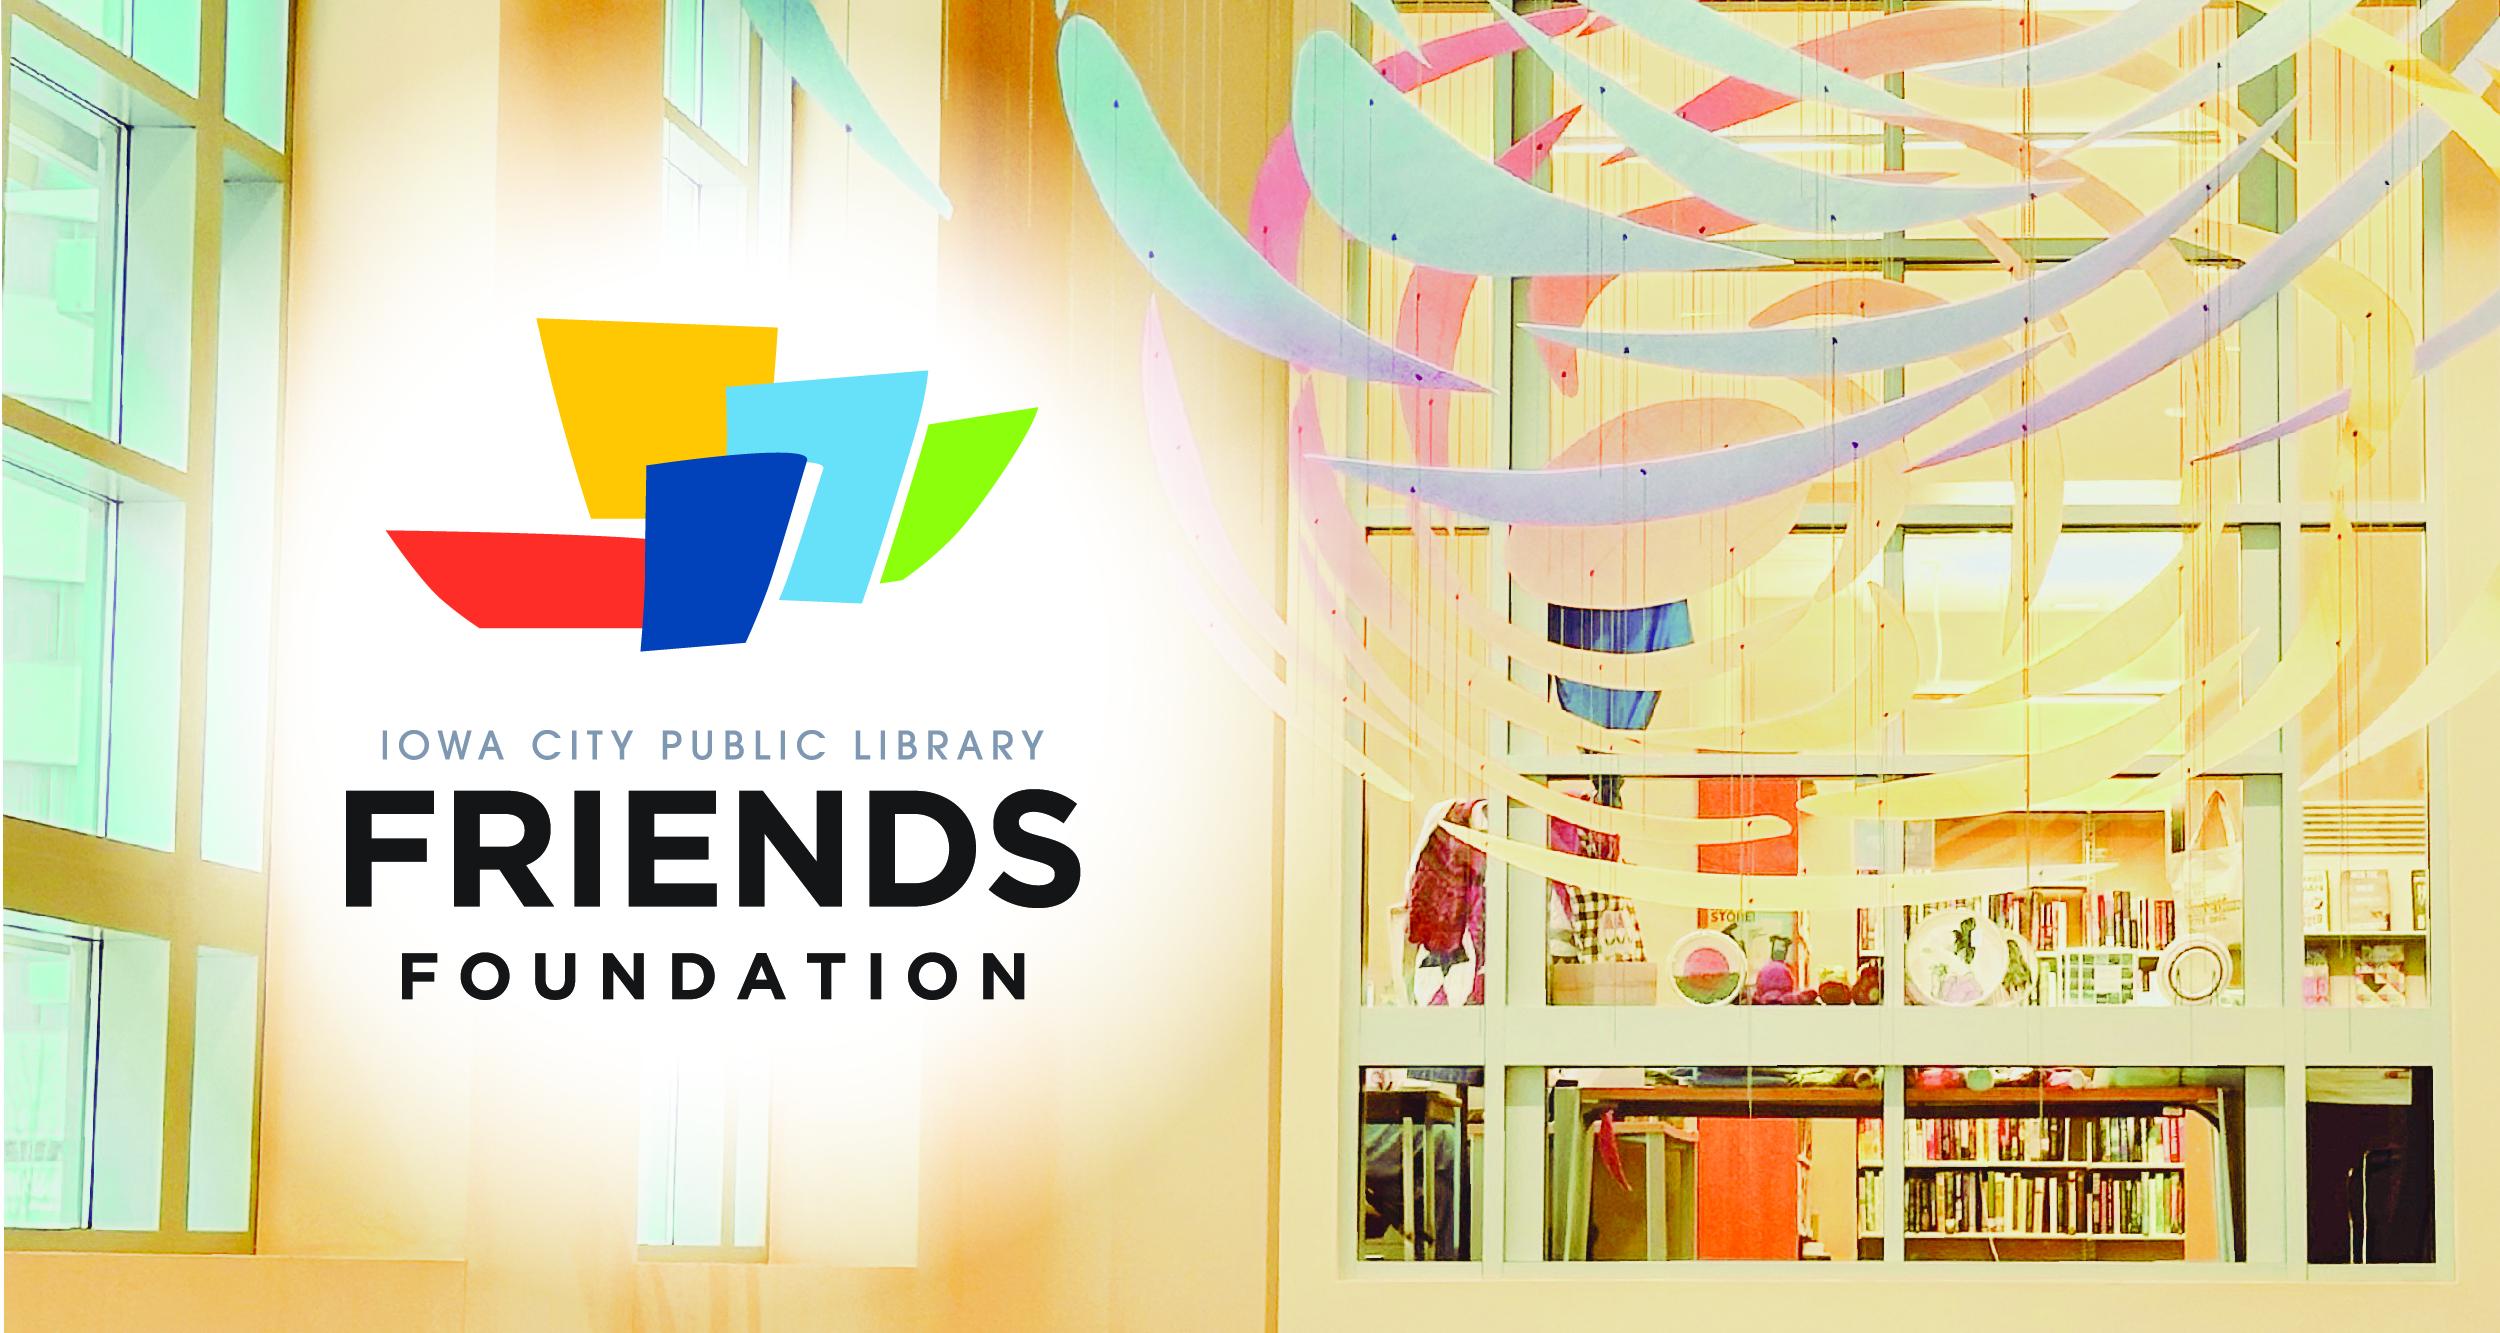 Iowa City Public Library Friends Foundation